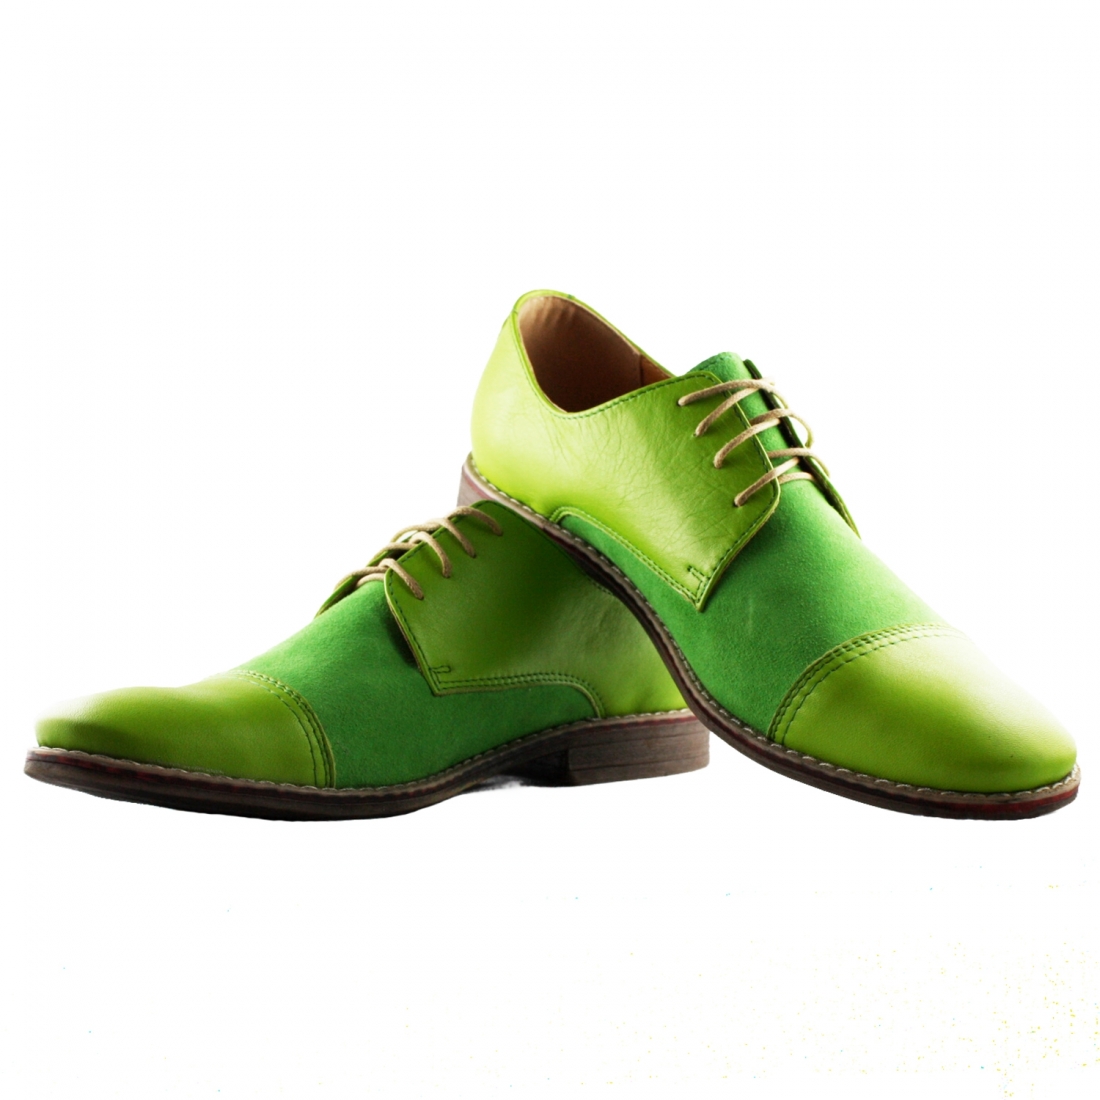 copy of Modello Erroso - Zapatos Clásicos - Handmade Colorful Italian Leather Shoes